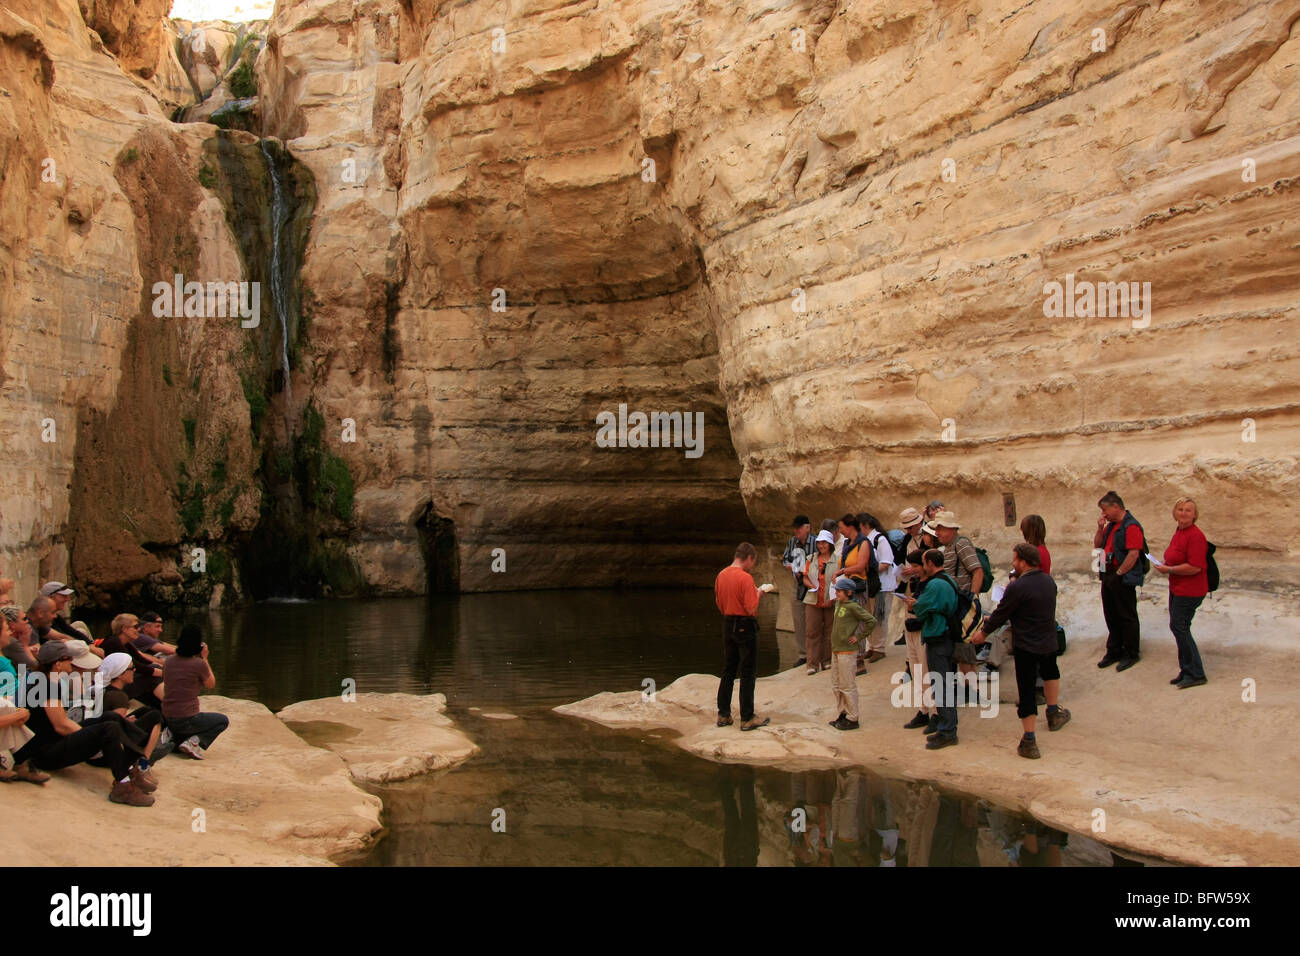 Israel, Negev. The waterfall at Ein Avdat national park in Wadi Zin